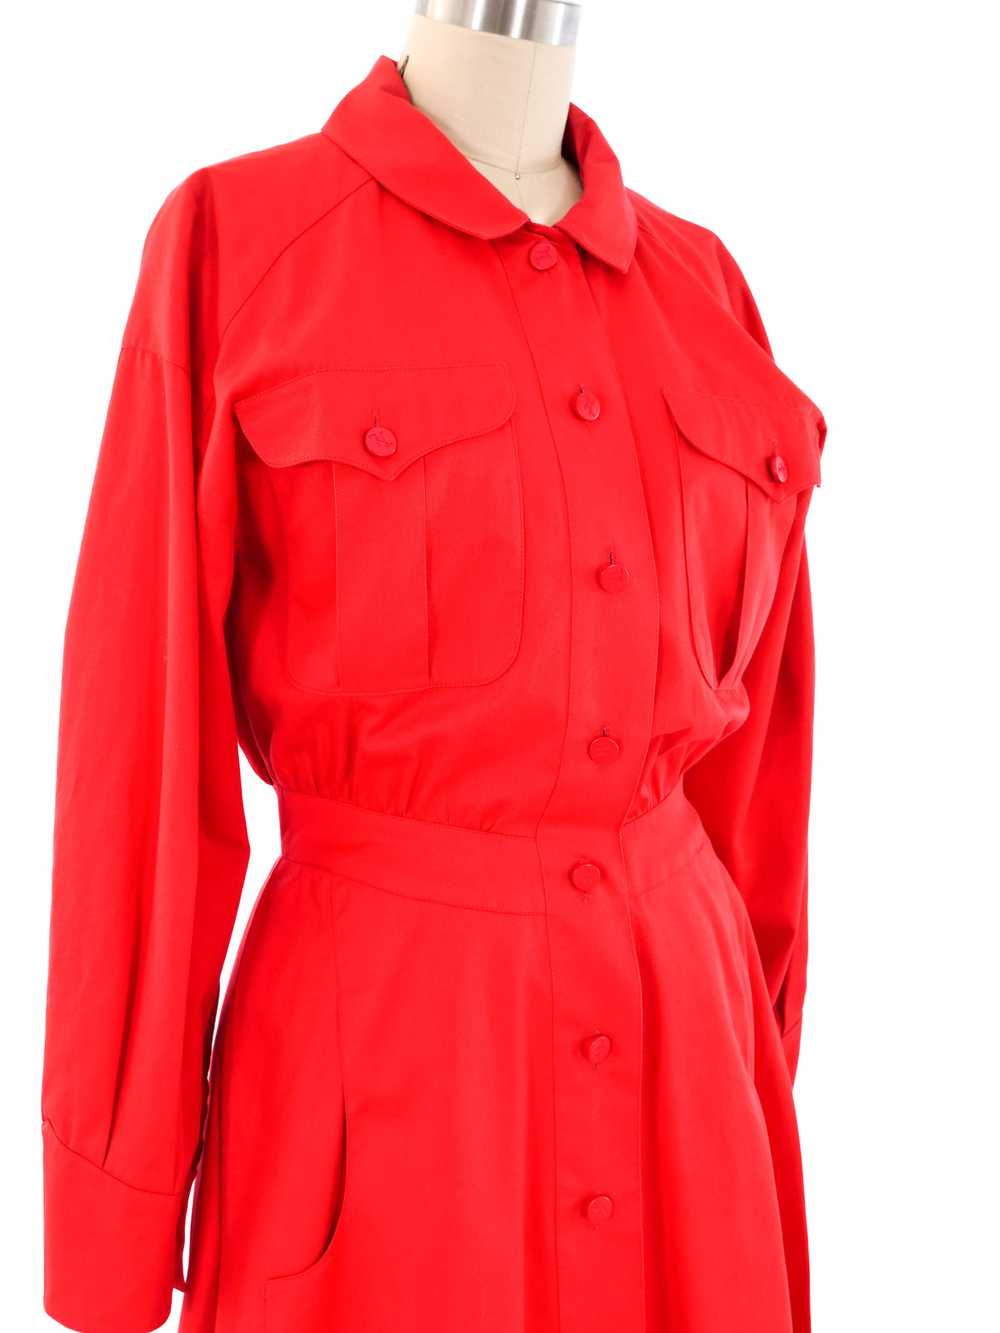 Karl Lagerfeld Red Shirt Dress - image 7